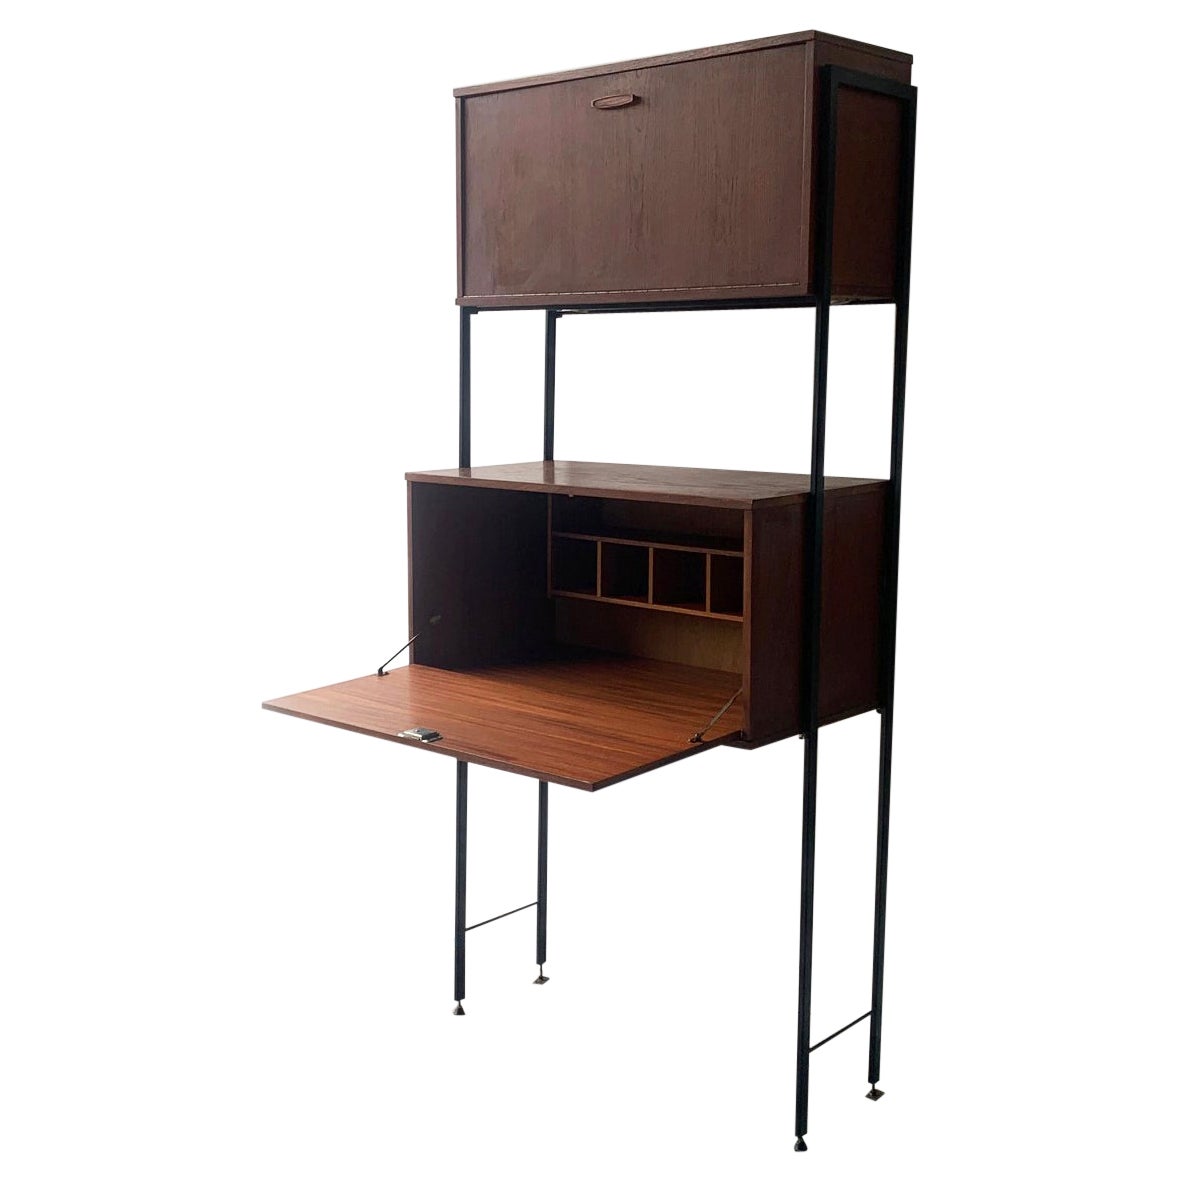 1960’s mid century teak wall unit with desk unit by Avalon For Sale